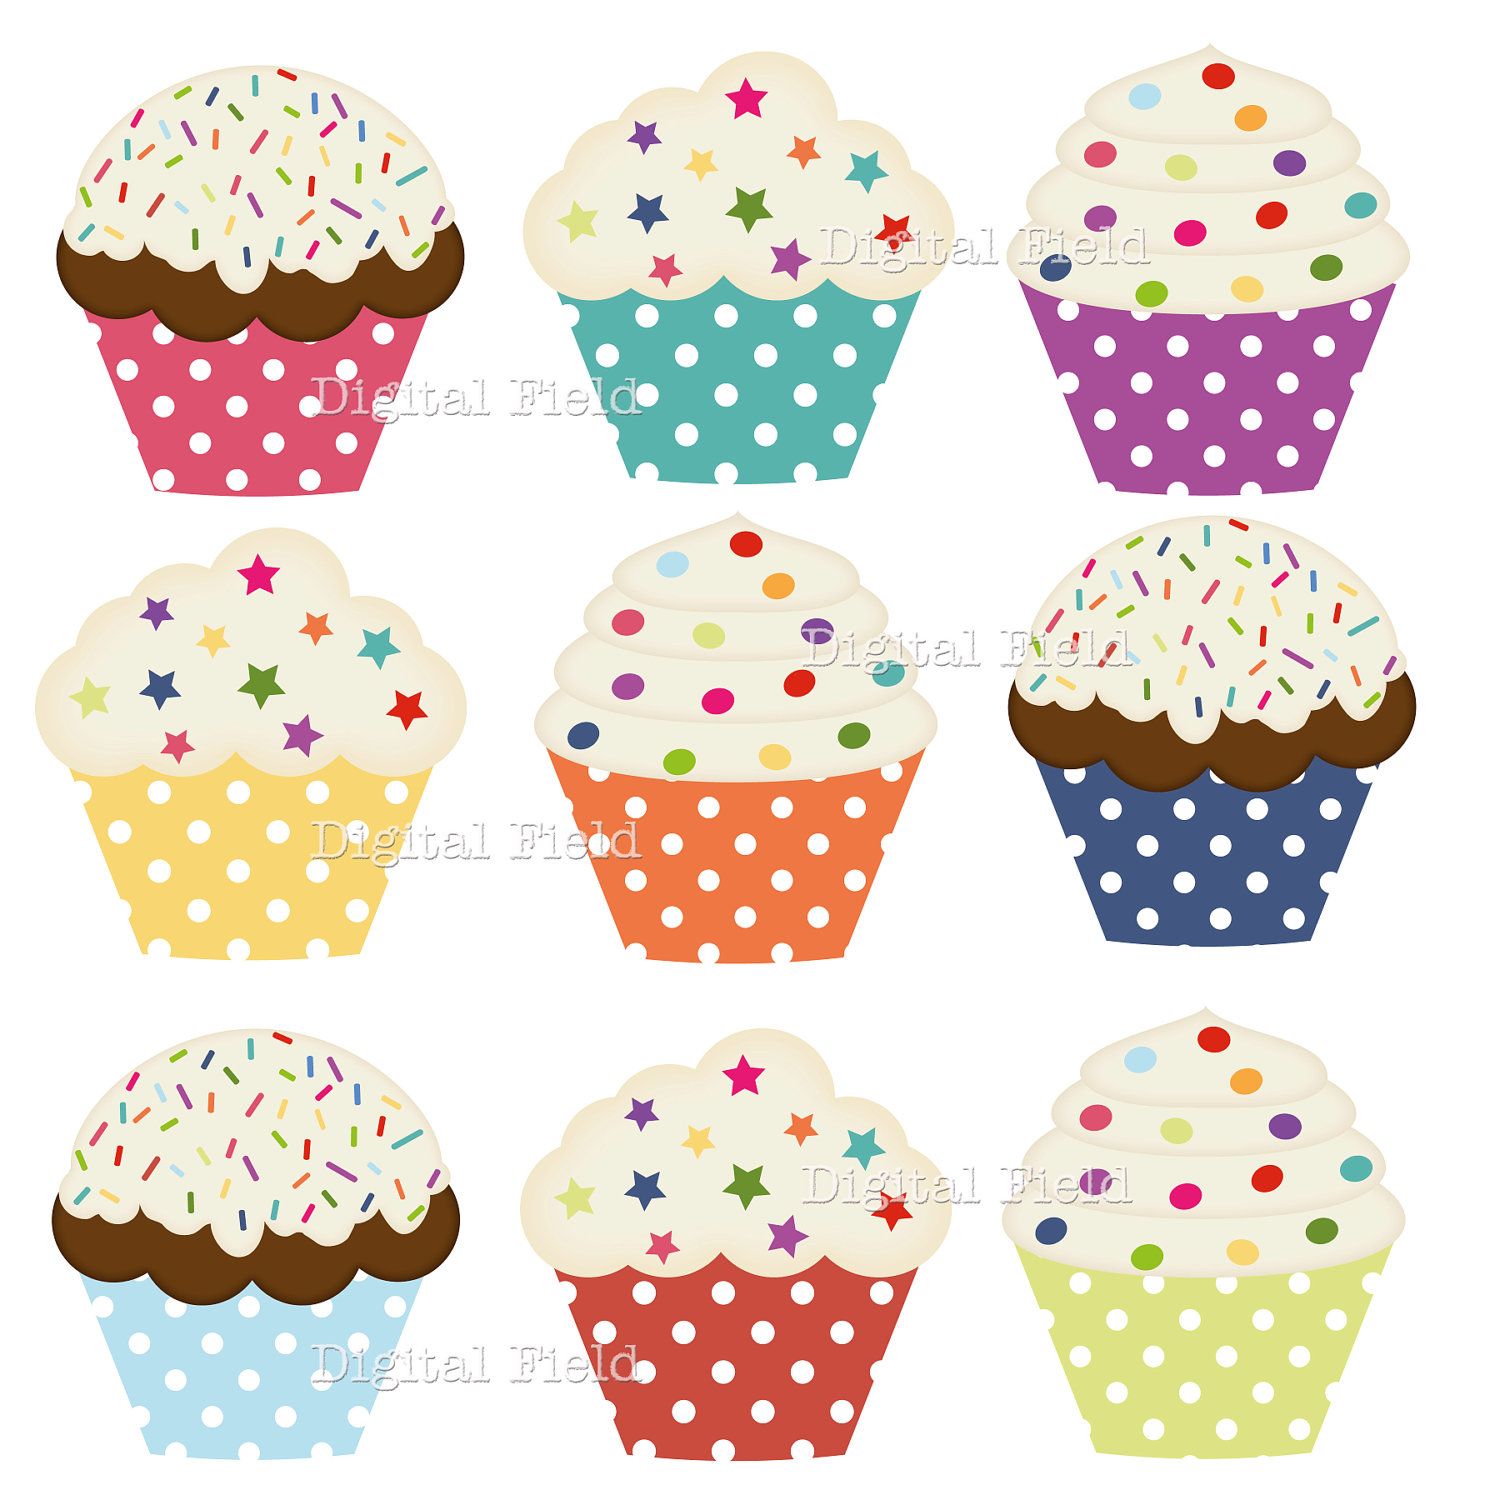 Cupcakes clipart printable cupcake. Instant download polka dot